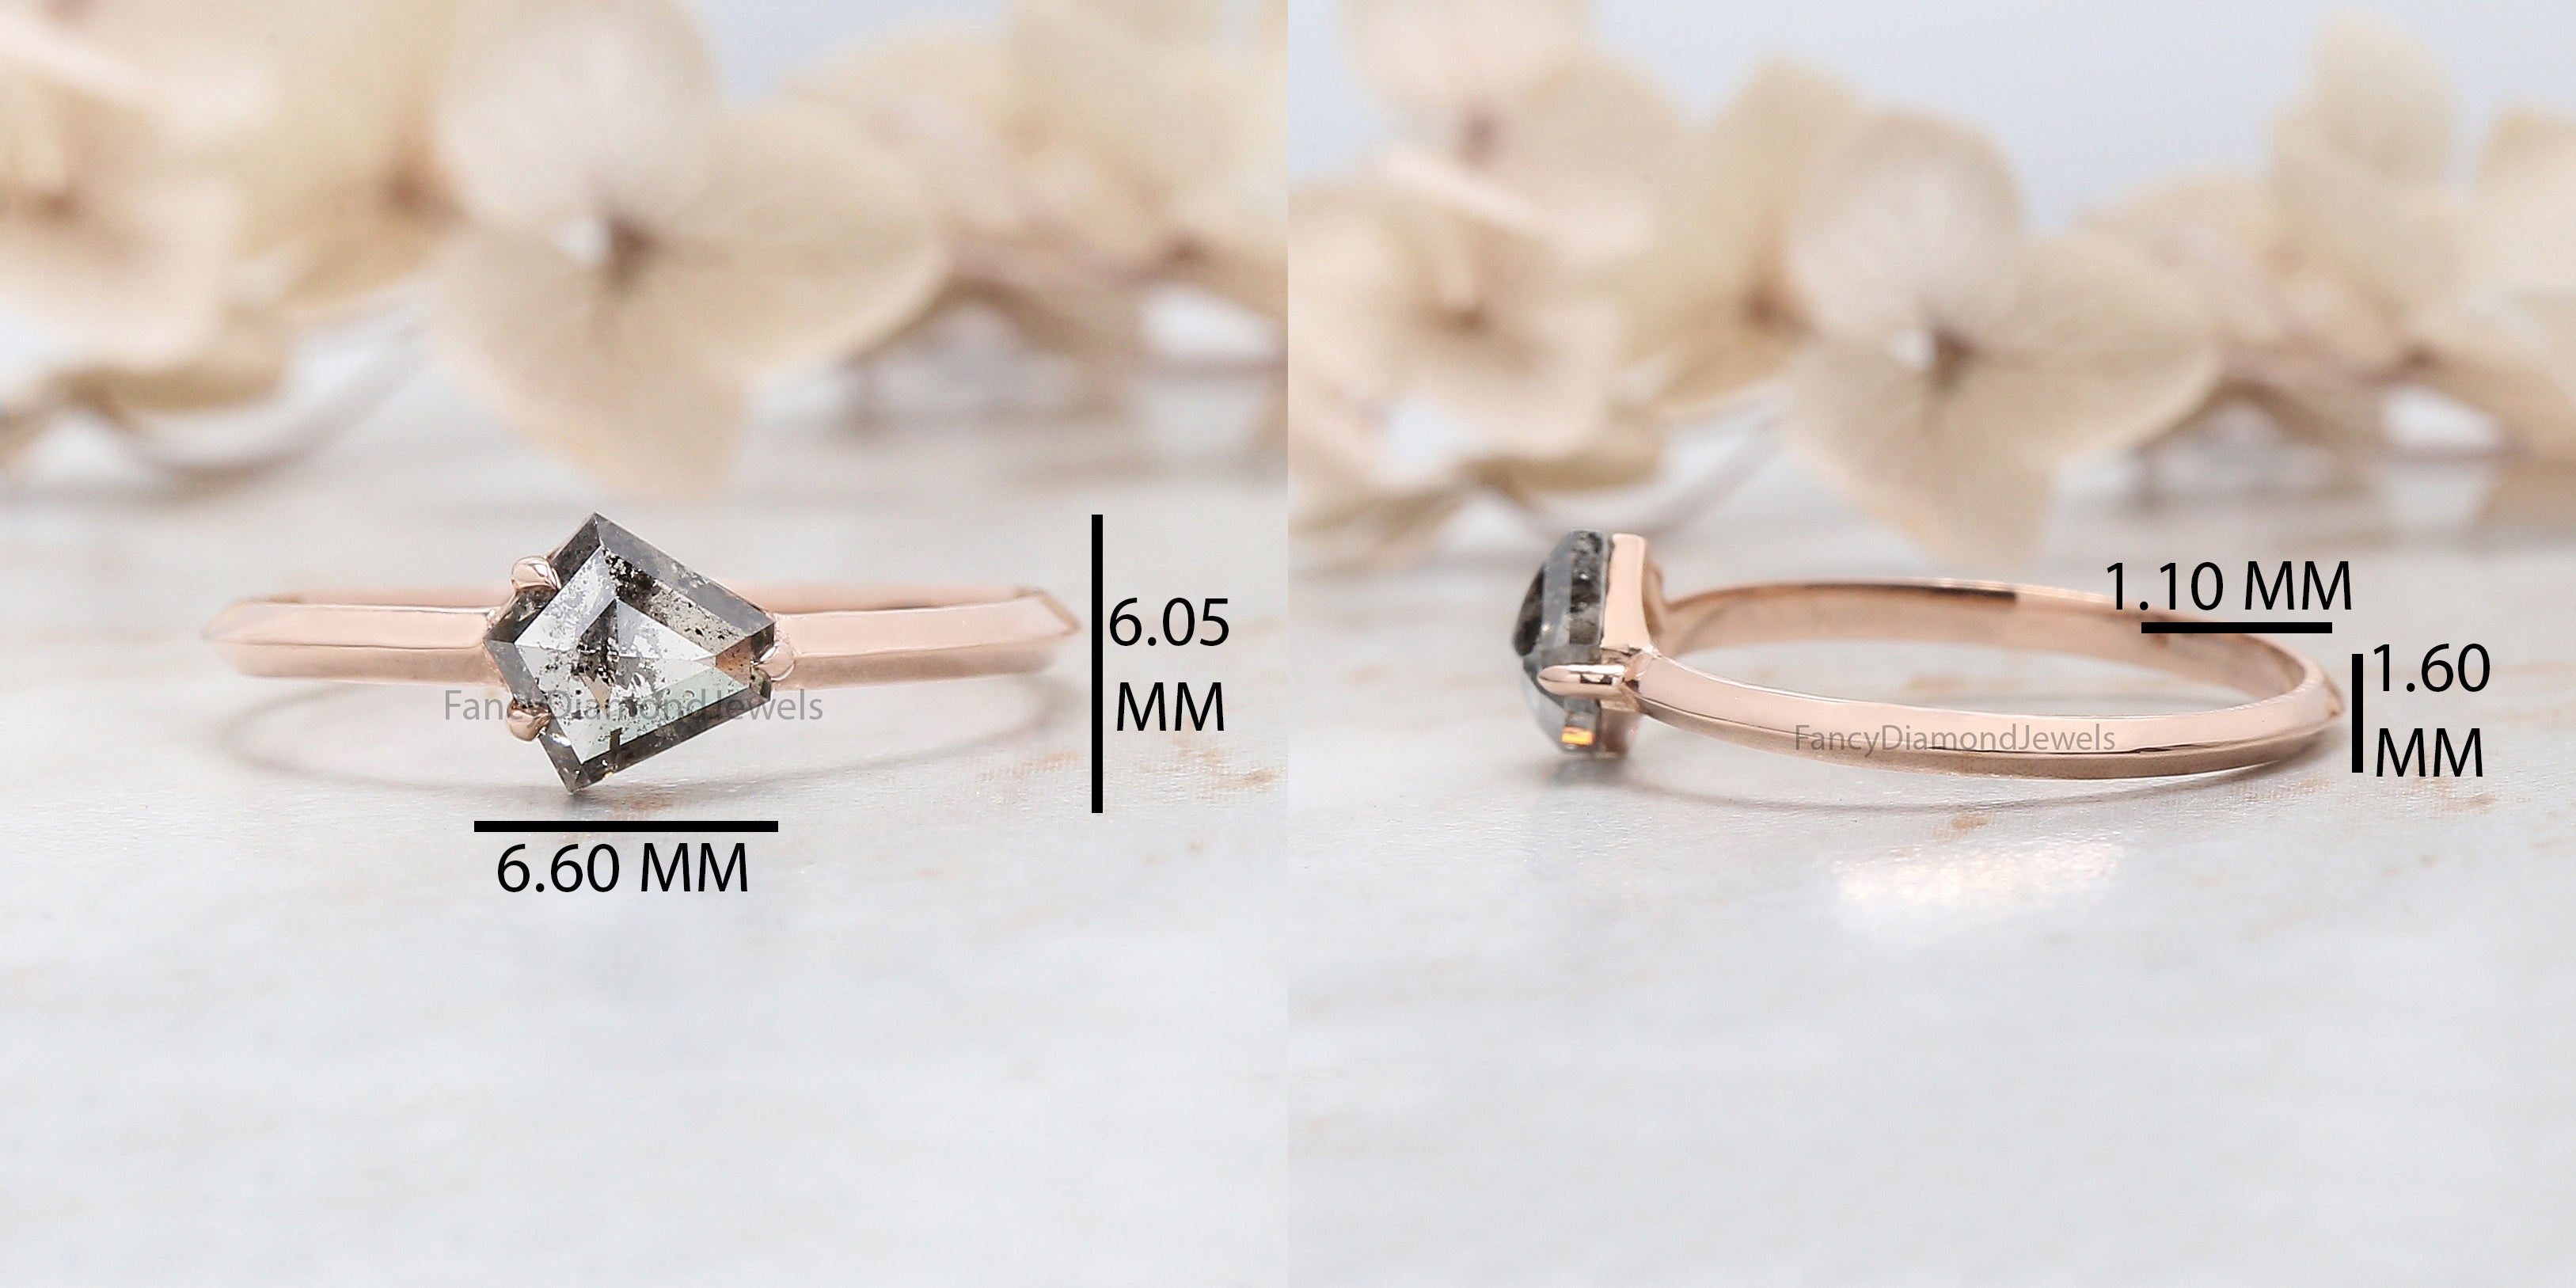 Pentagon Cut Salt And Pepper Diamond Ring 0.72 Ct 6.00 MM Pentagon Diamond Ring 14K Rose Gold Silver Engagement Ring Gift For Her QL9518